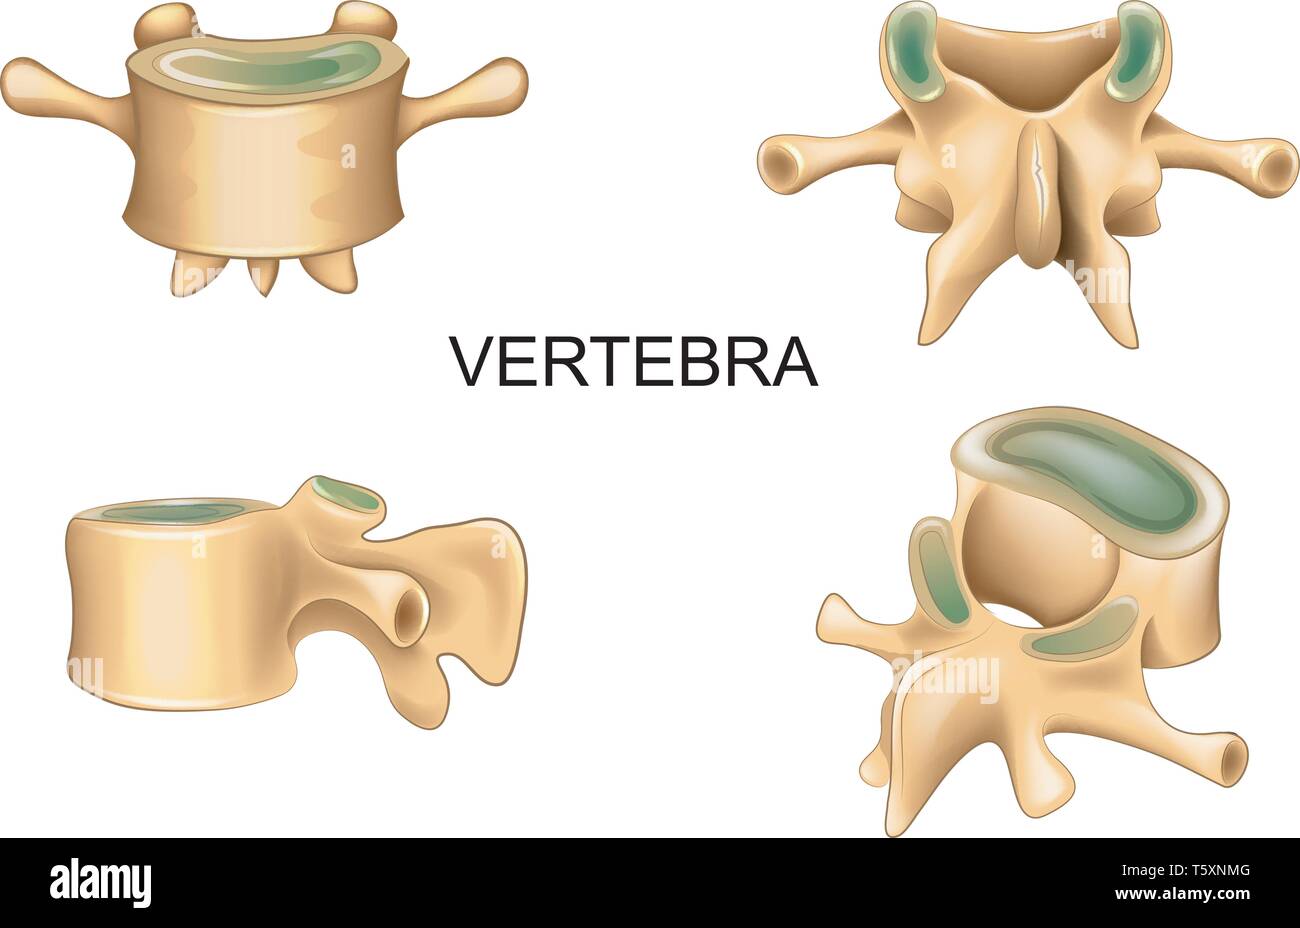 vector illustration of lumbar vertebra in different position Stock Vector